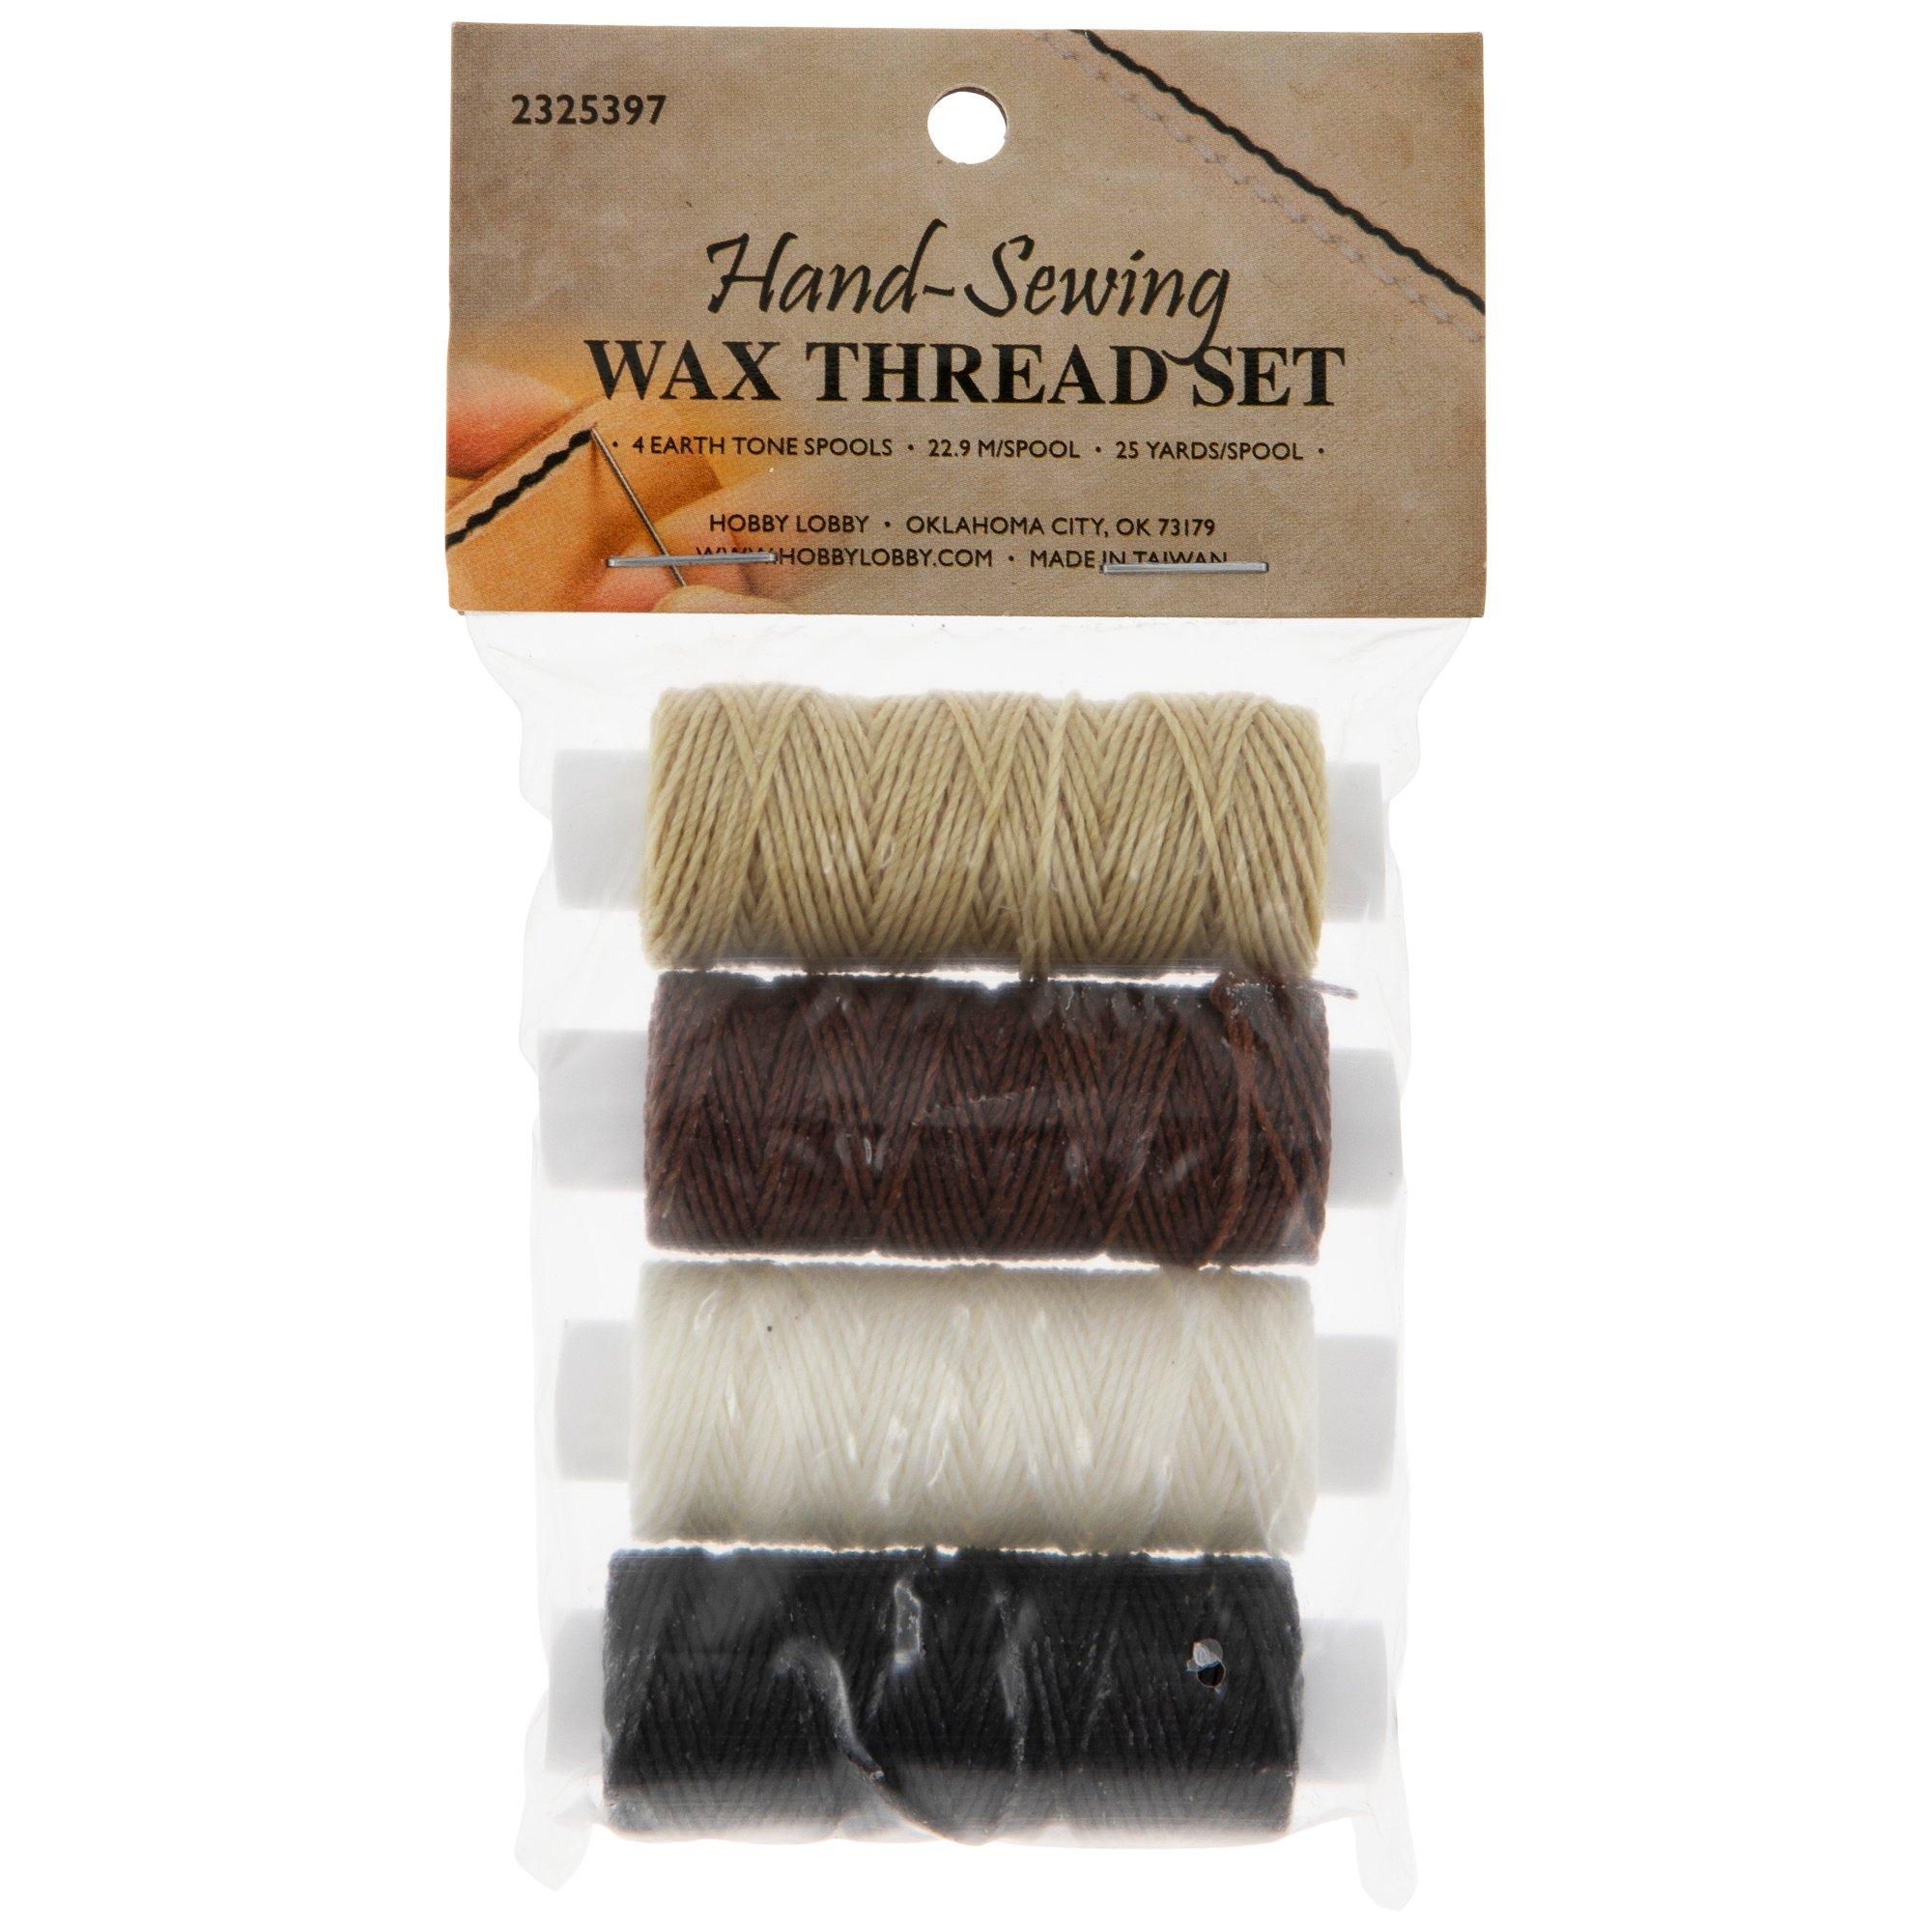 Hand-Sewing Wax Thread Set, Hobby Lobby